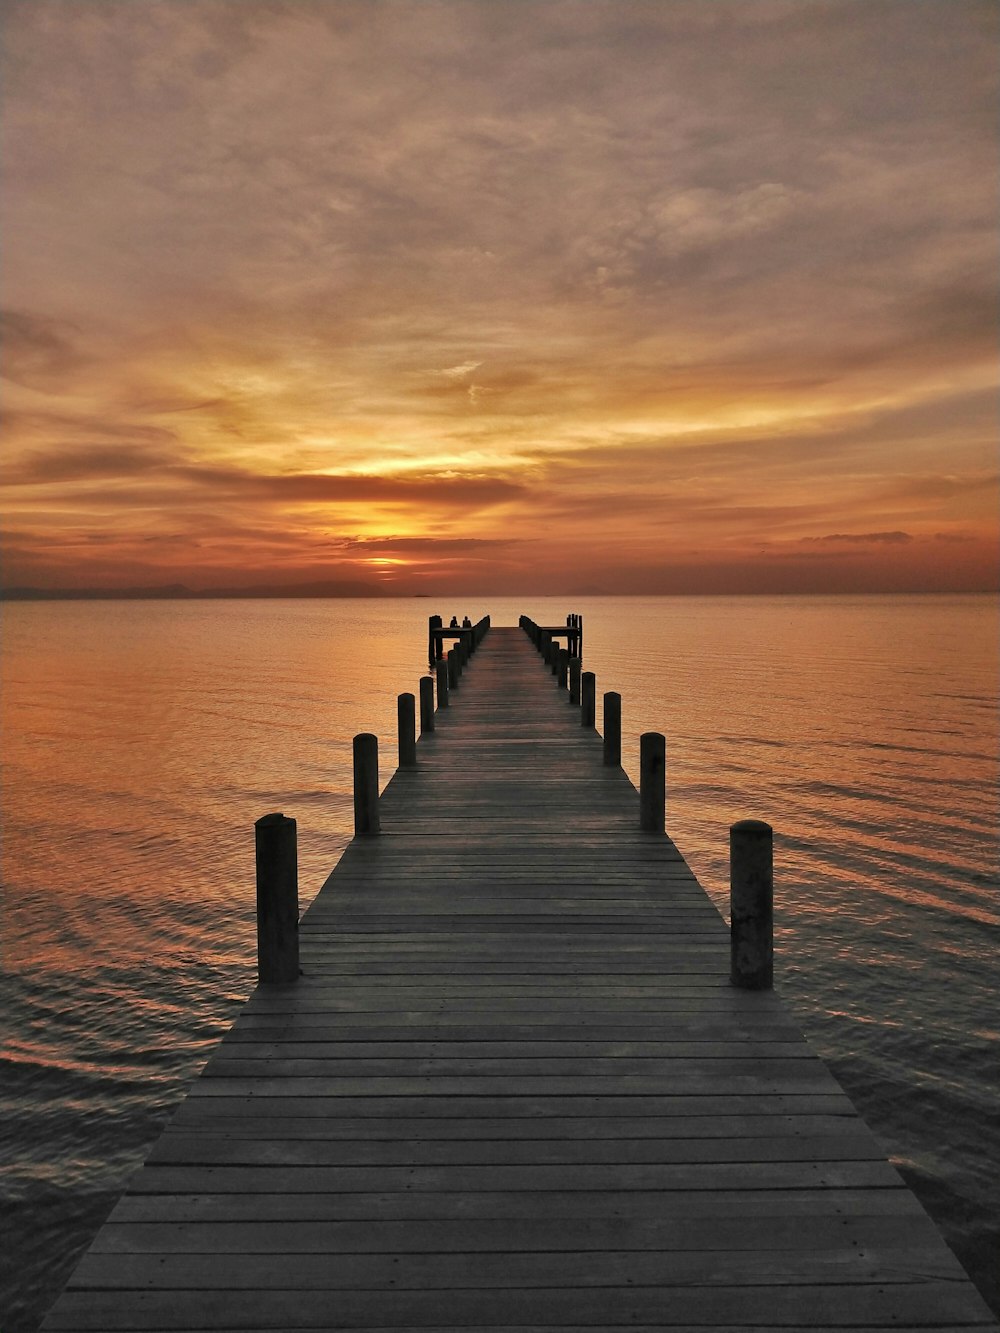 a long dock extending into the ocean at sunset